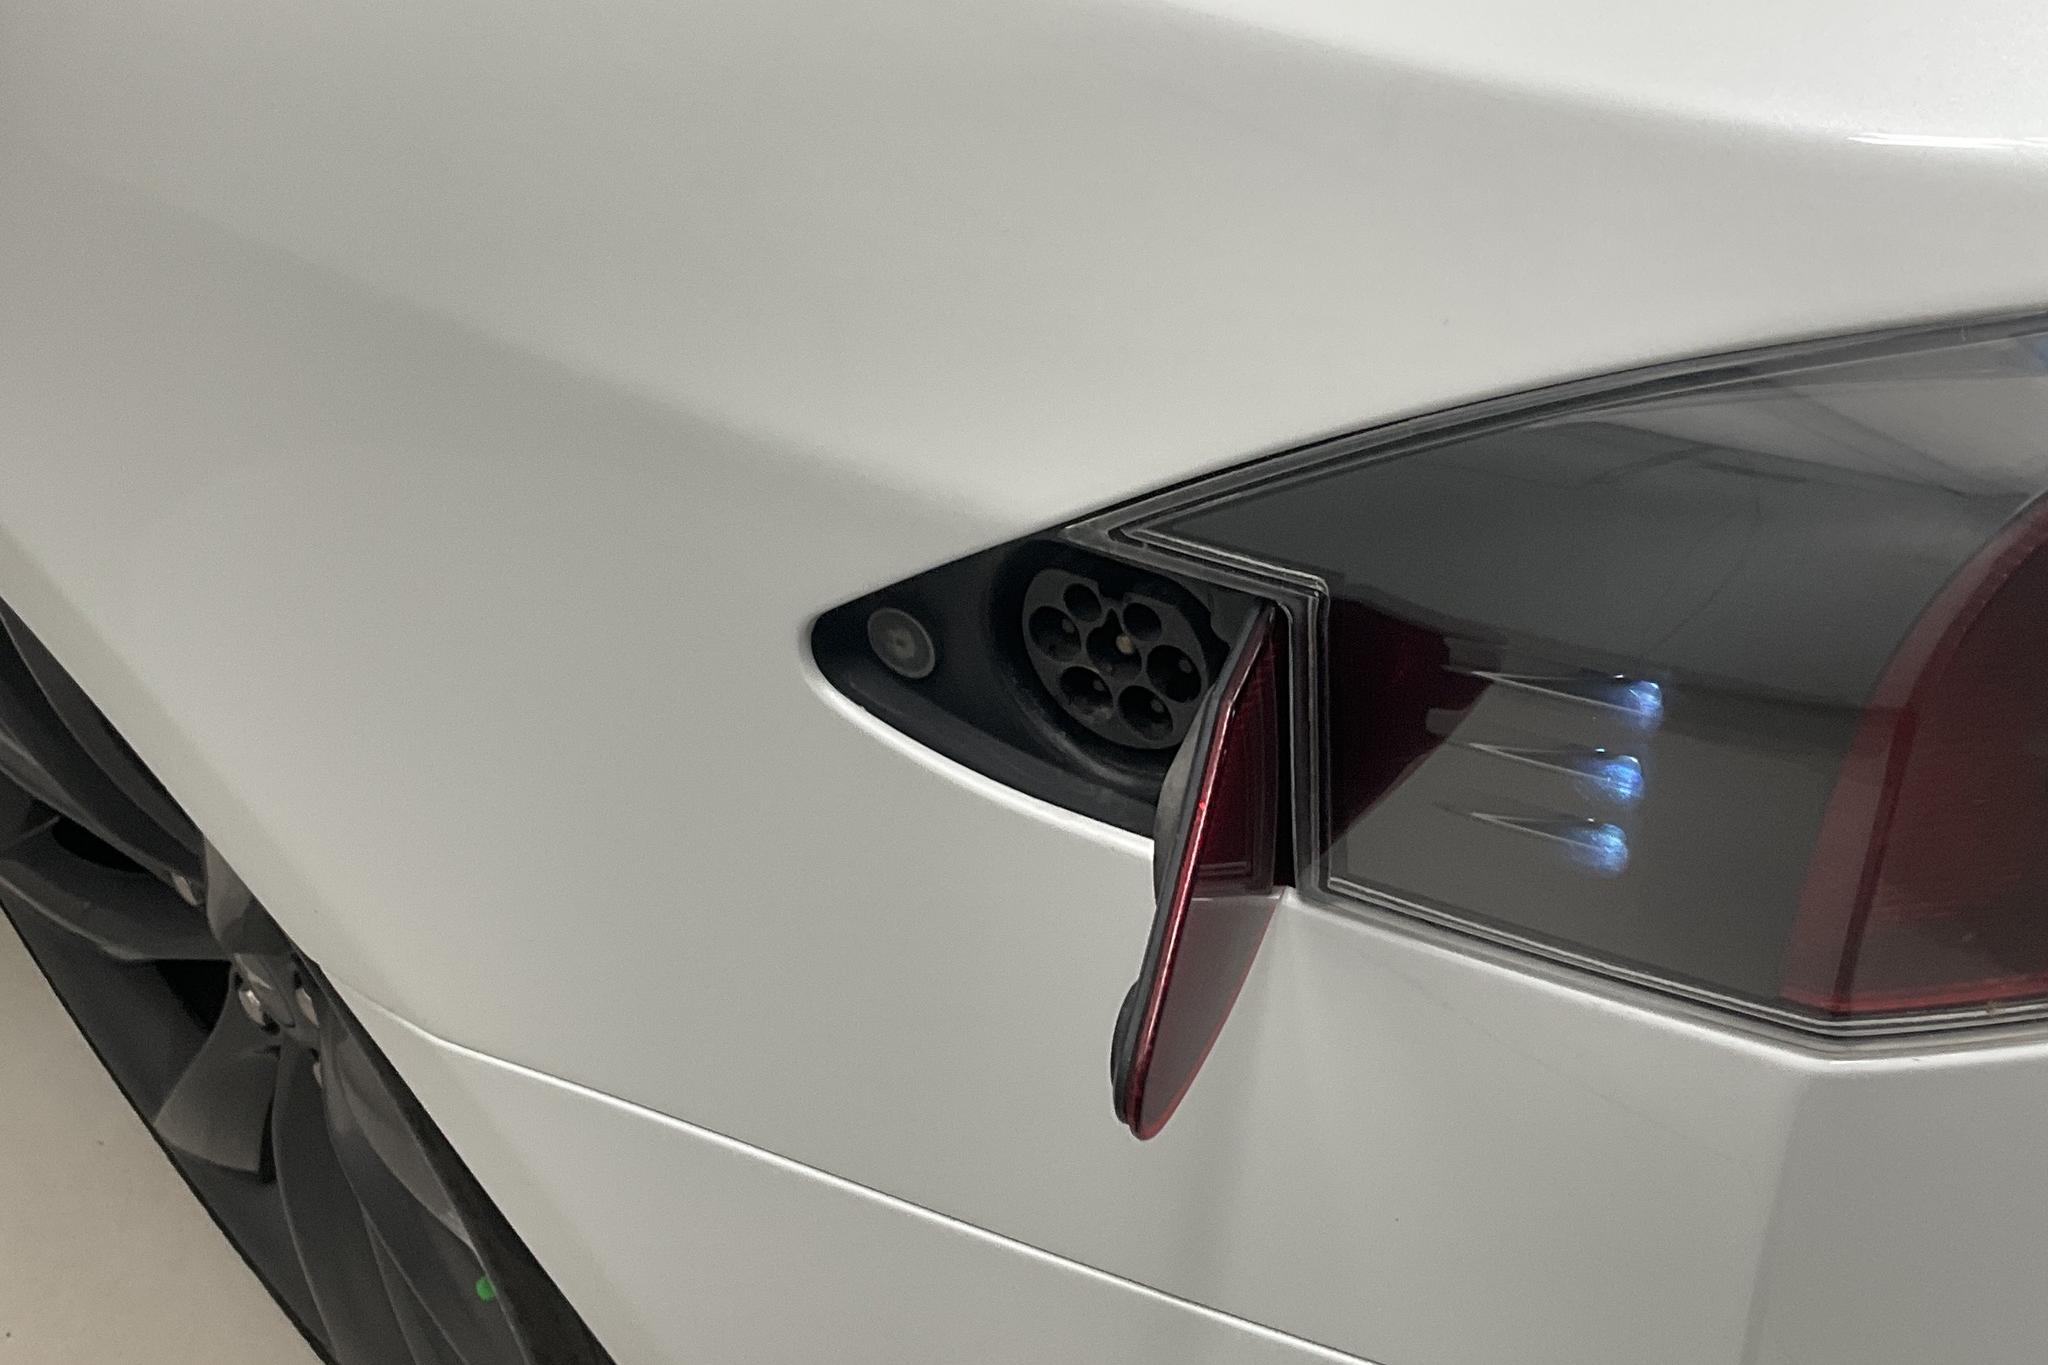 Tesla Model S P85D - 91 960 km - Automatic - white - 2015